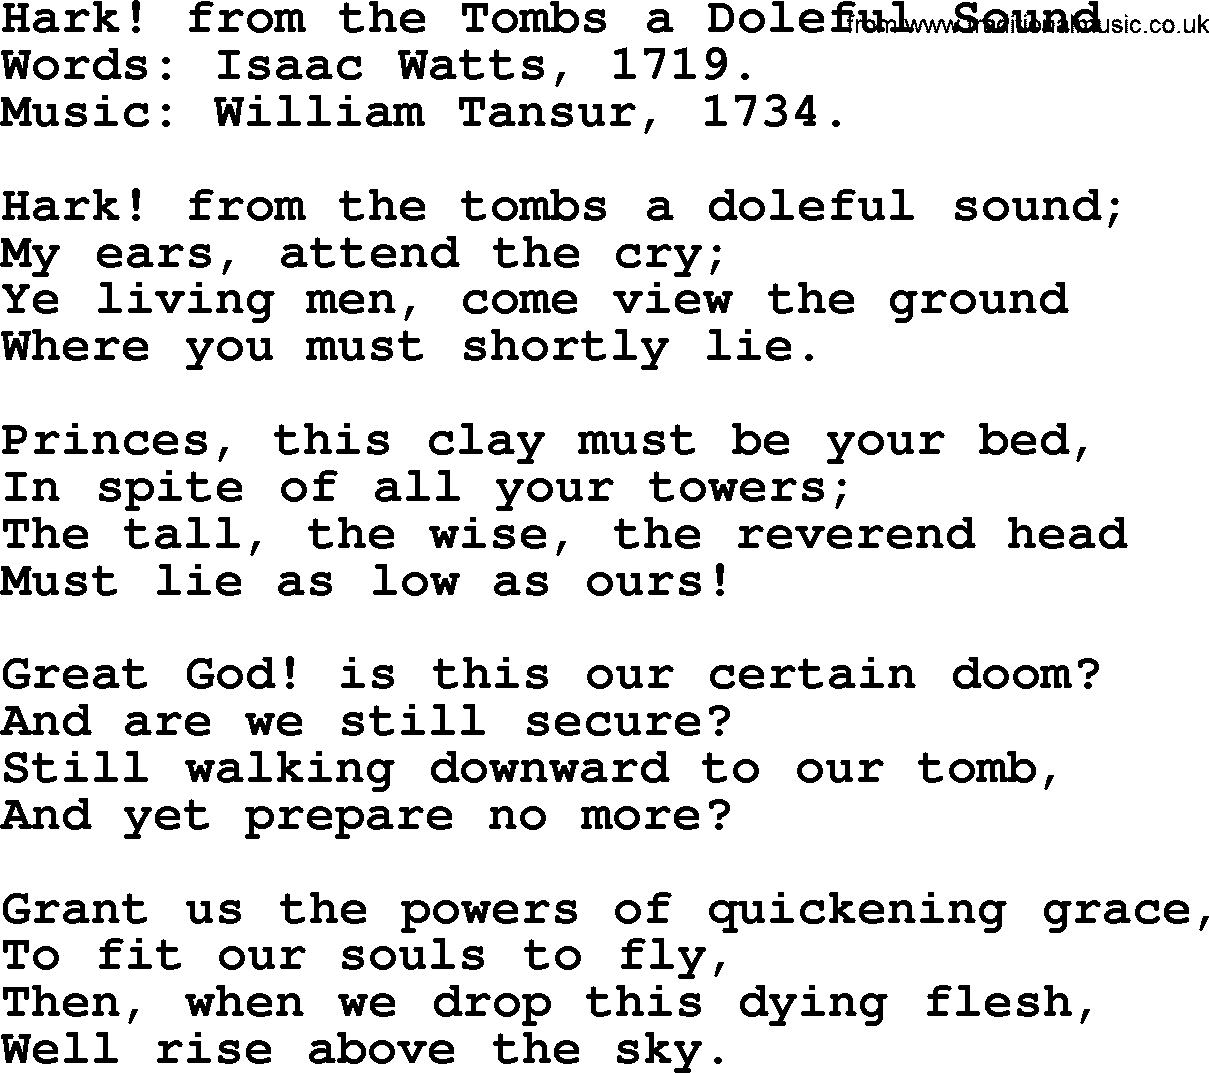 Isaac Watts Christian hymn: Hark! from the Tombs a Doleful Sound- lyricss